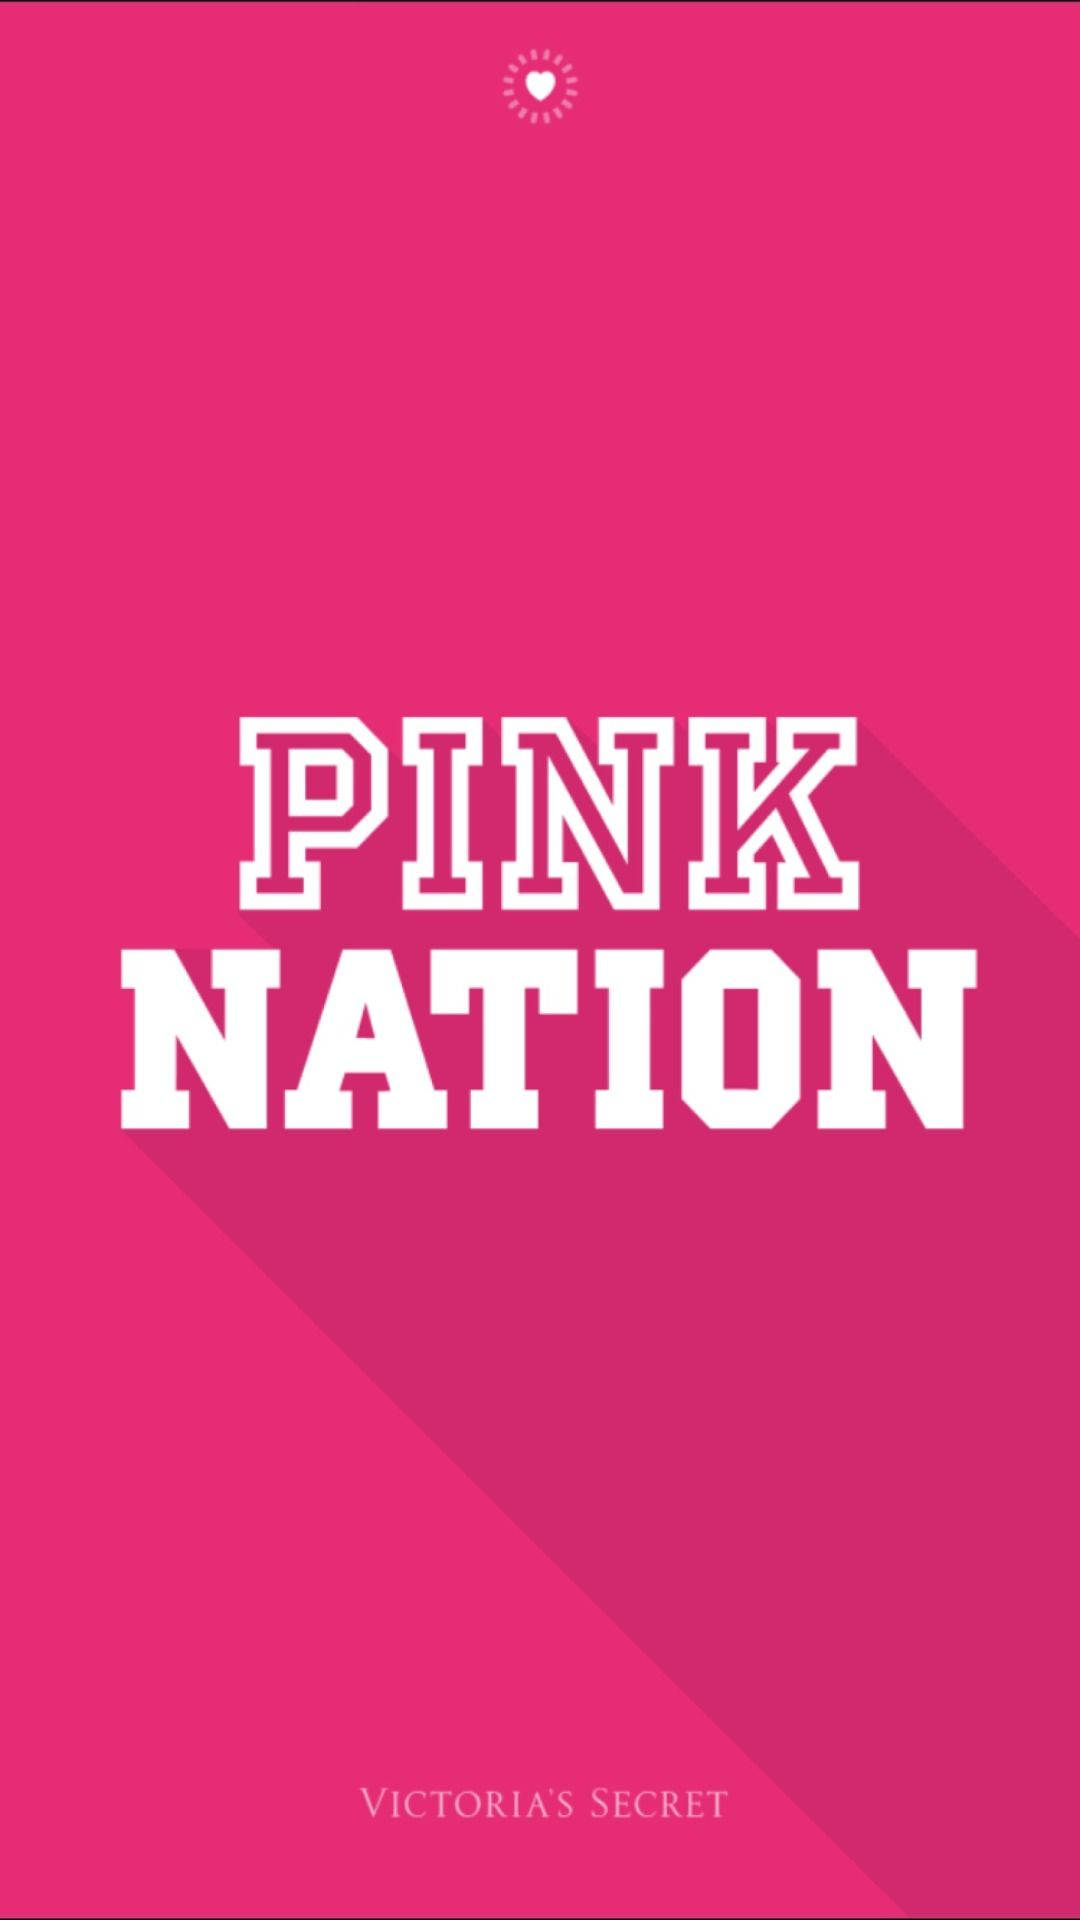 Captivating Victoria Secret Pink Nation Collection Background